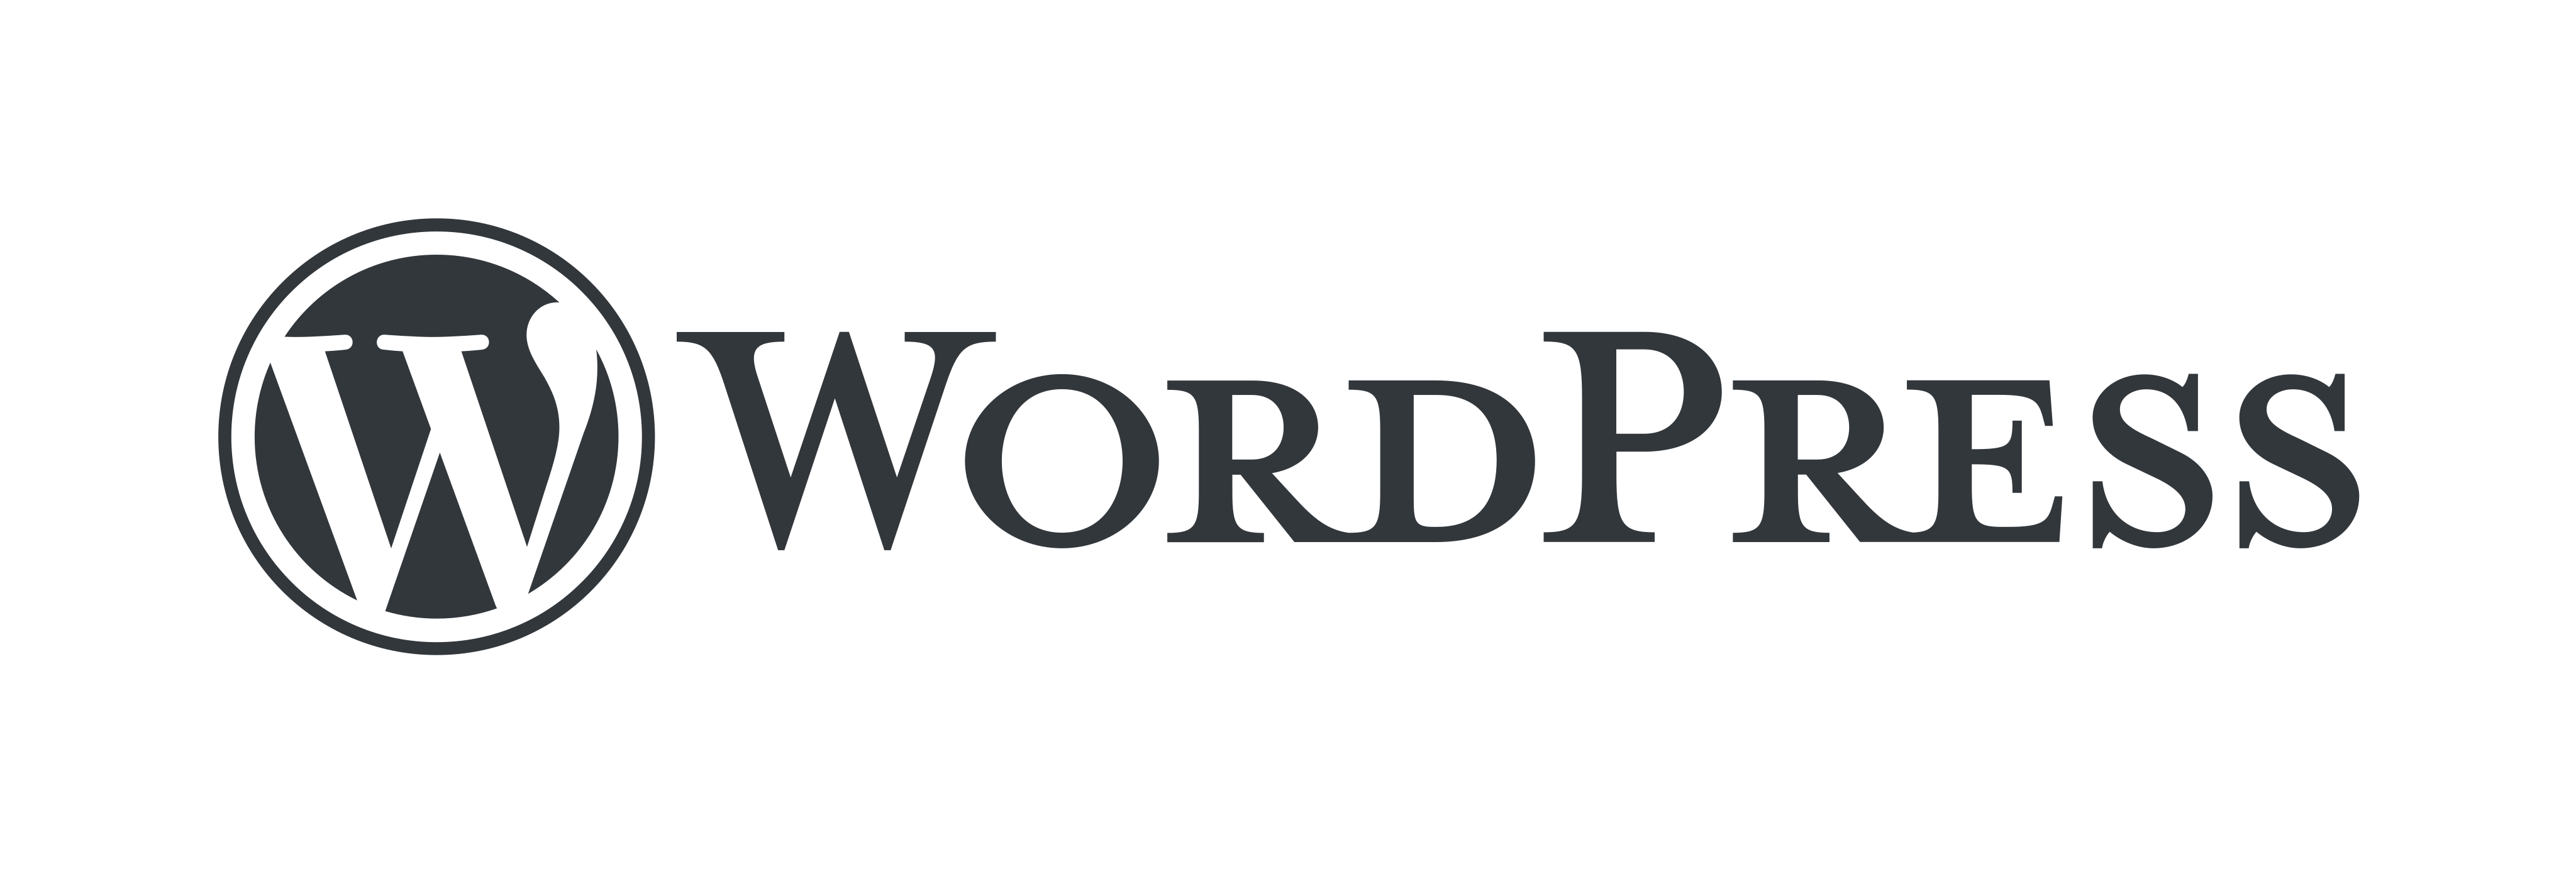 wordpress logo 3 1 - Wordpress Logo